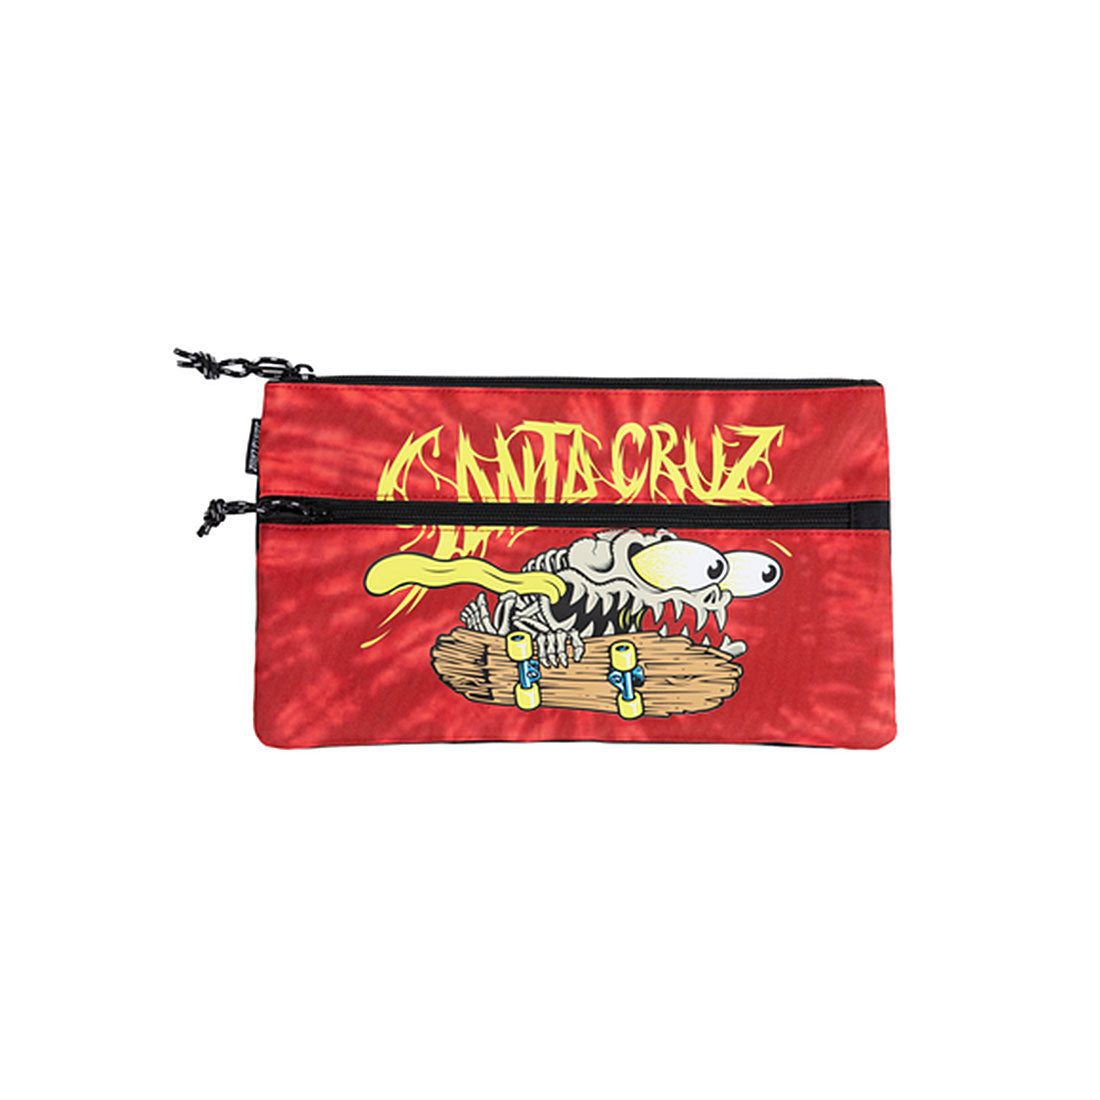 Santa Cruz Bone Slasher Pencil Case - Red Tie Dye Skateboard Accessories